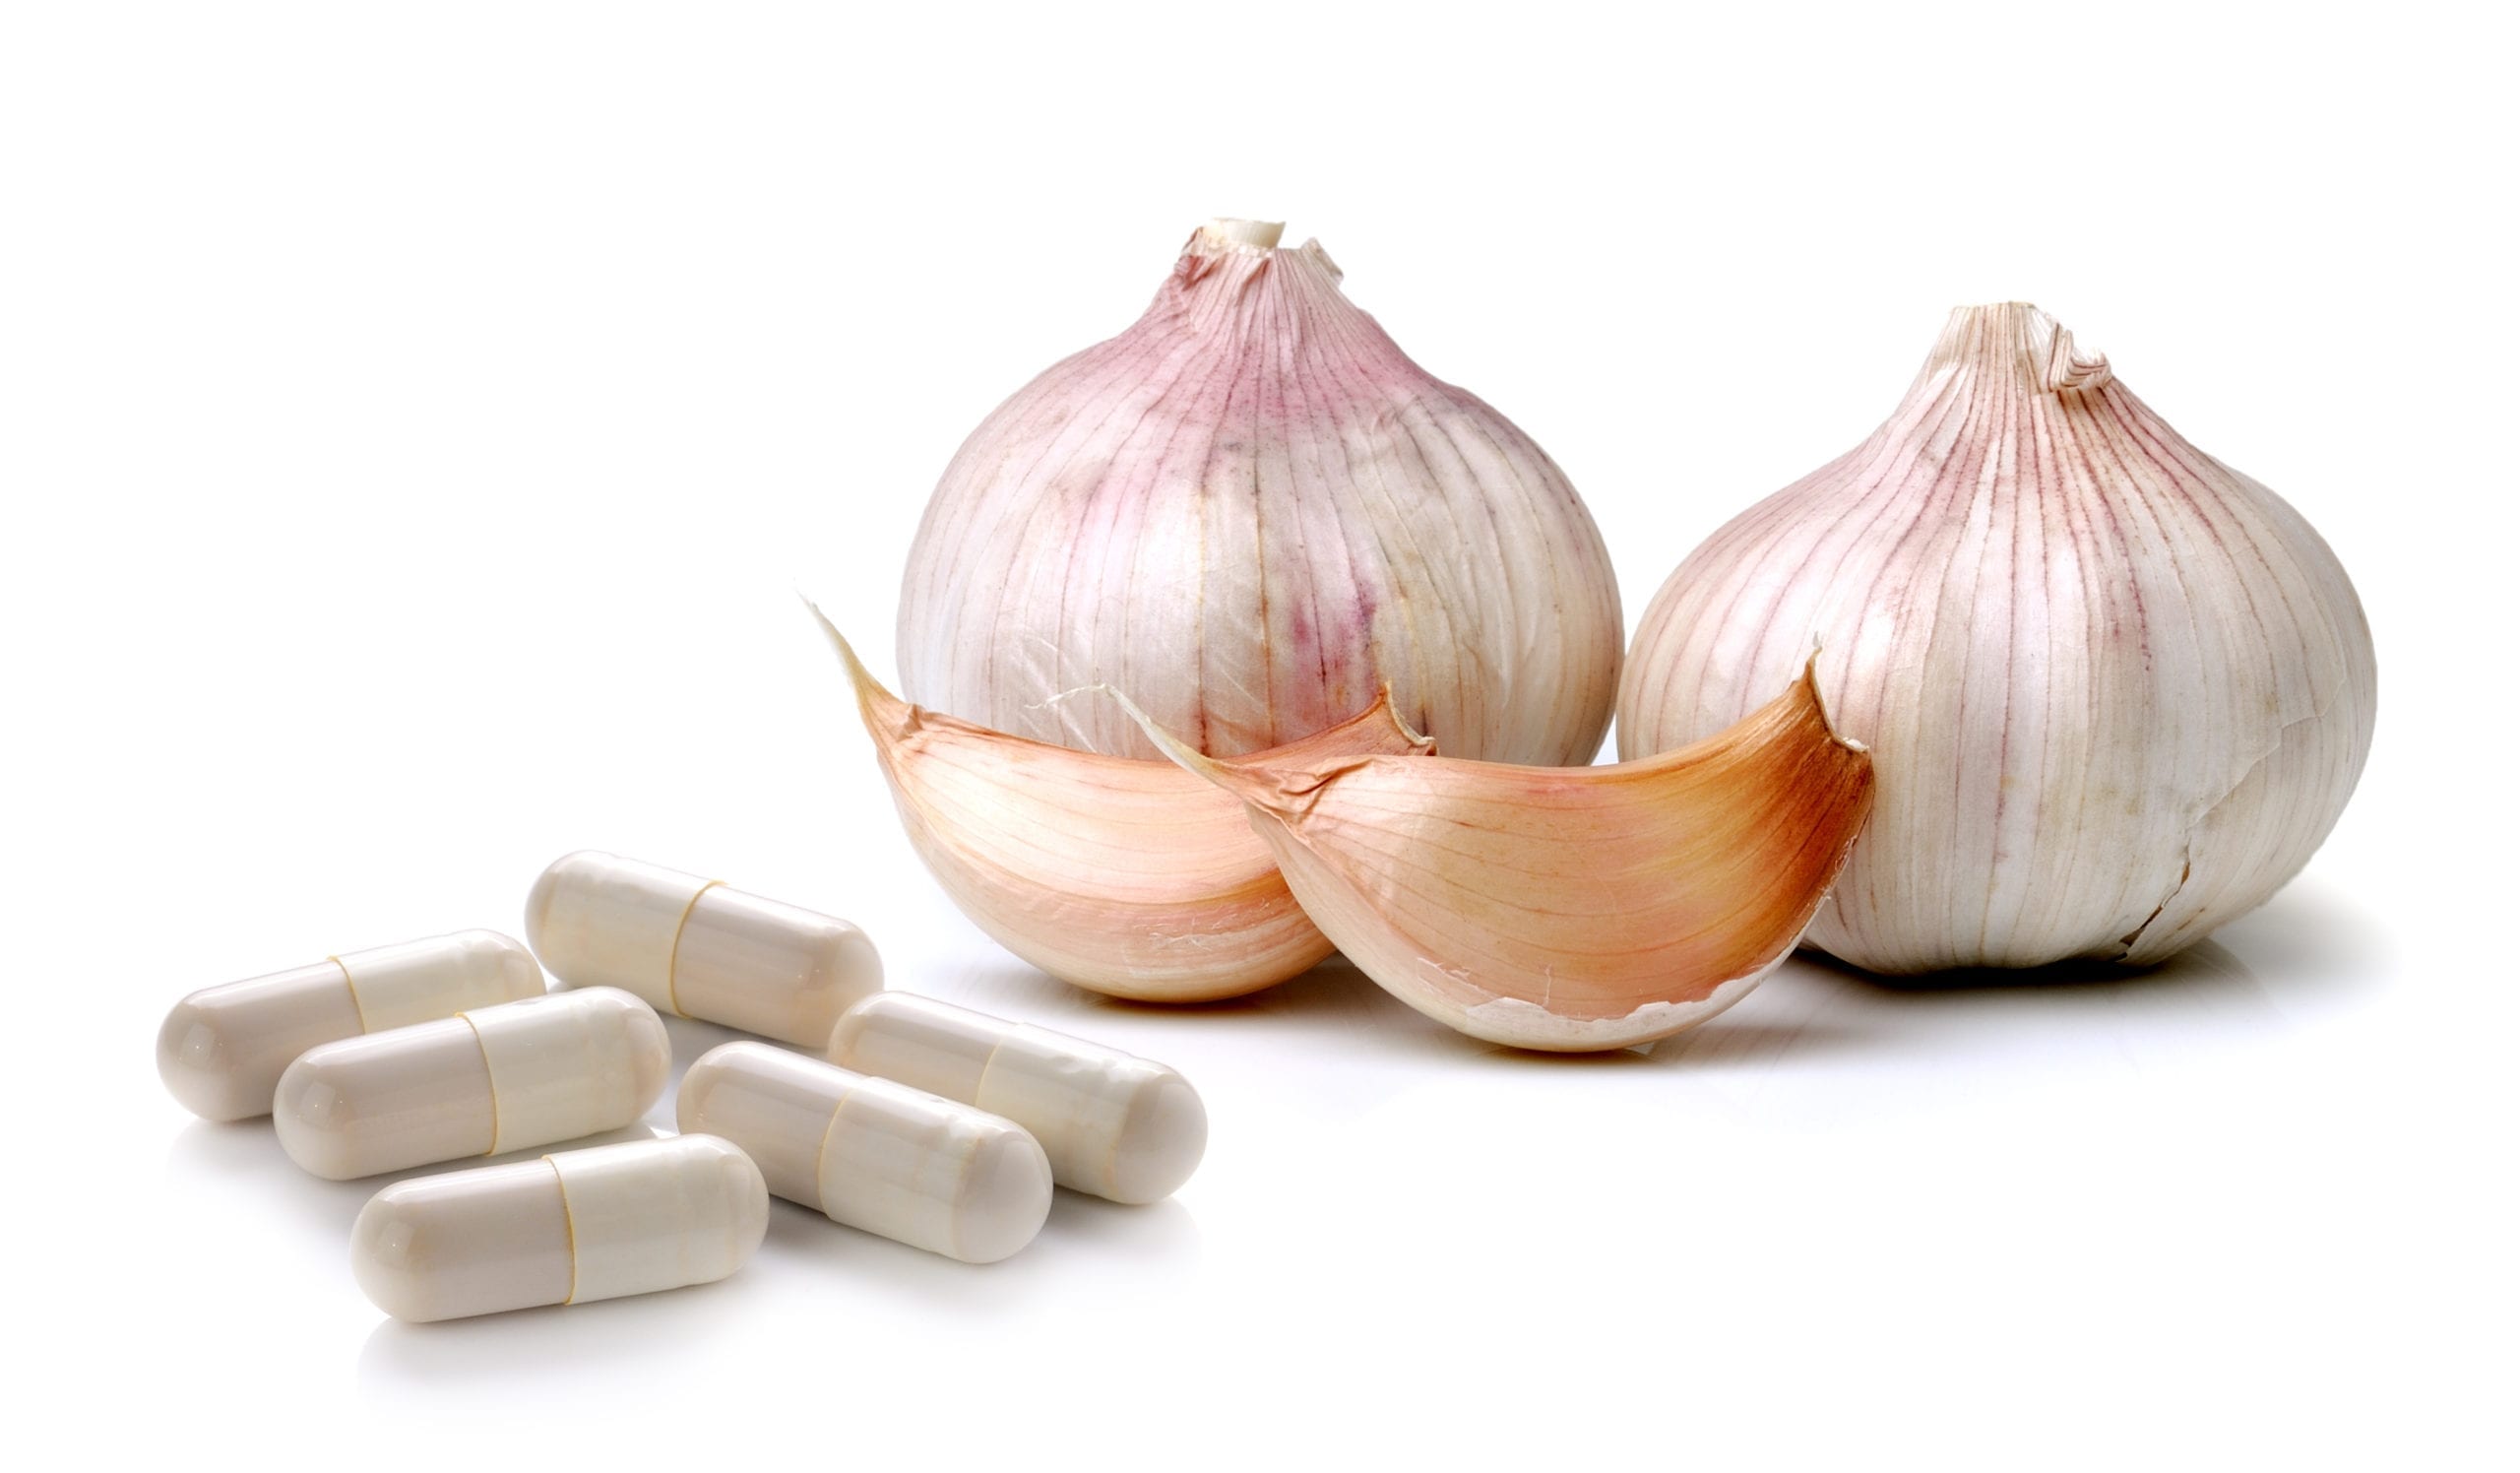 Garlic cloves with pills